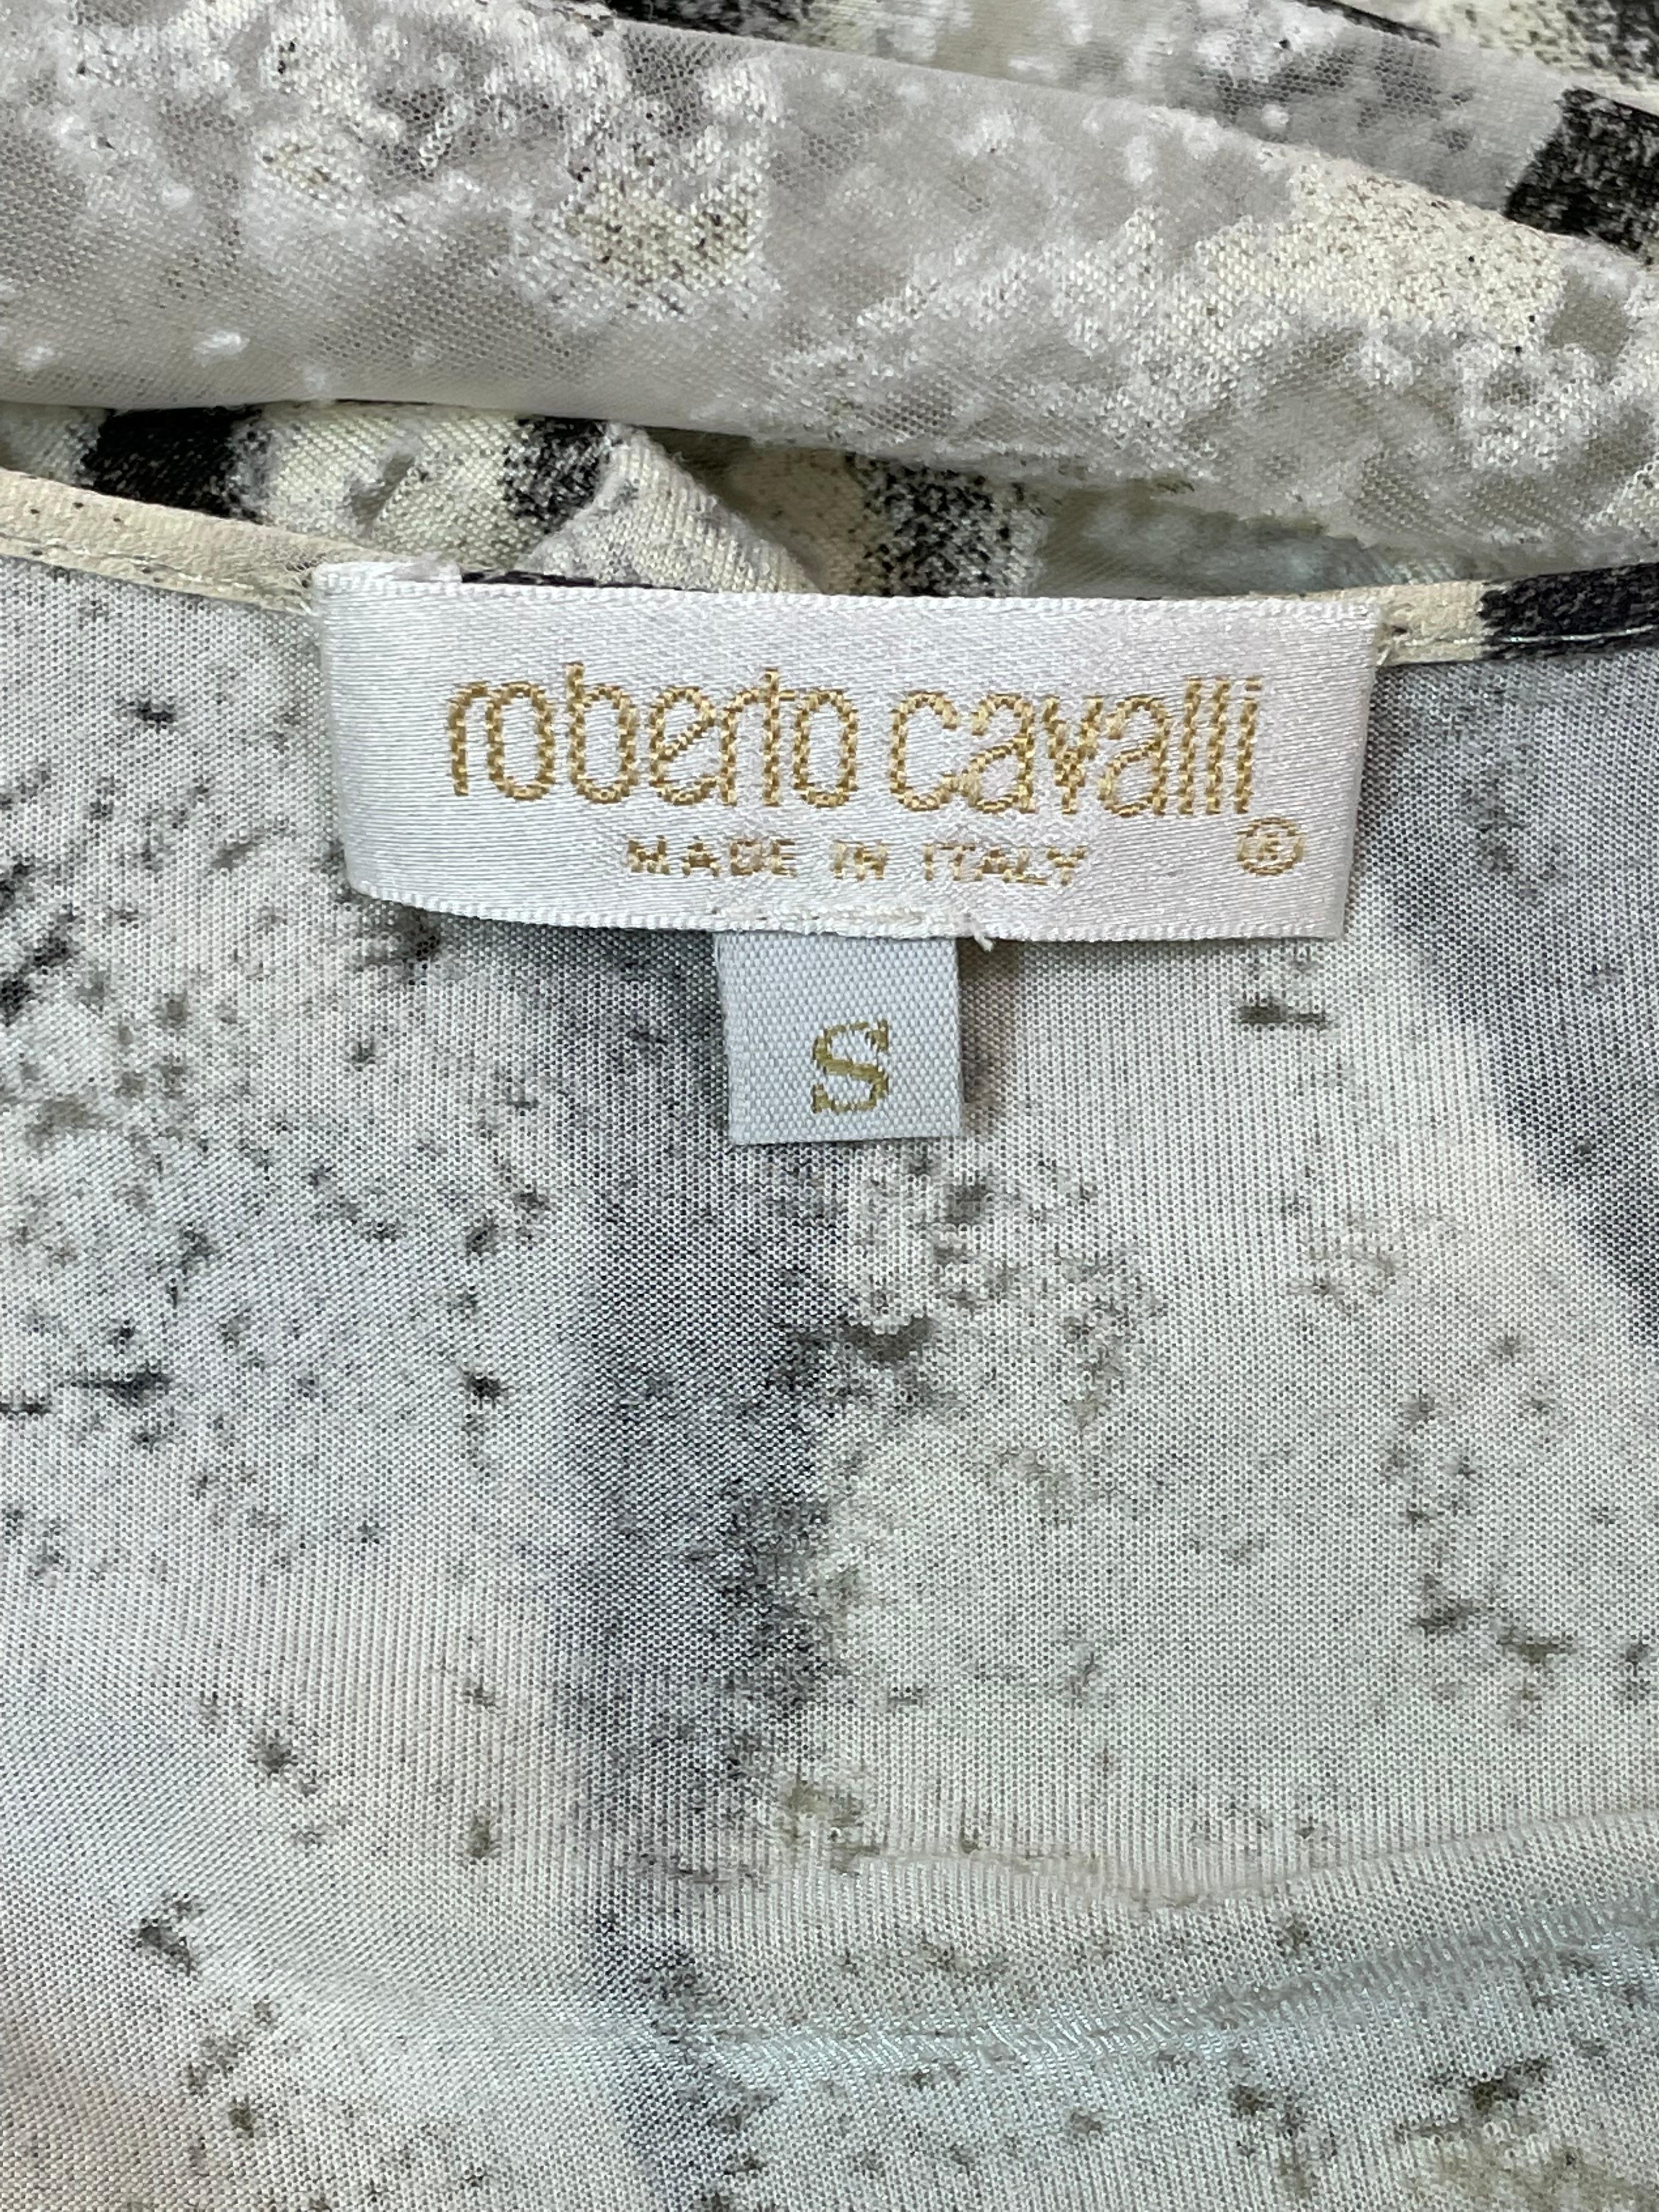 S/S 1999 Roberto Cavalli Runway Sheer White & Zebra Maxi Dress In Good Condition In Yukon, OK